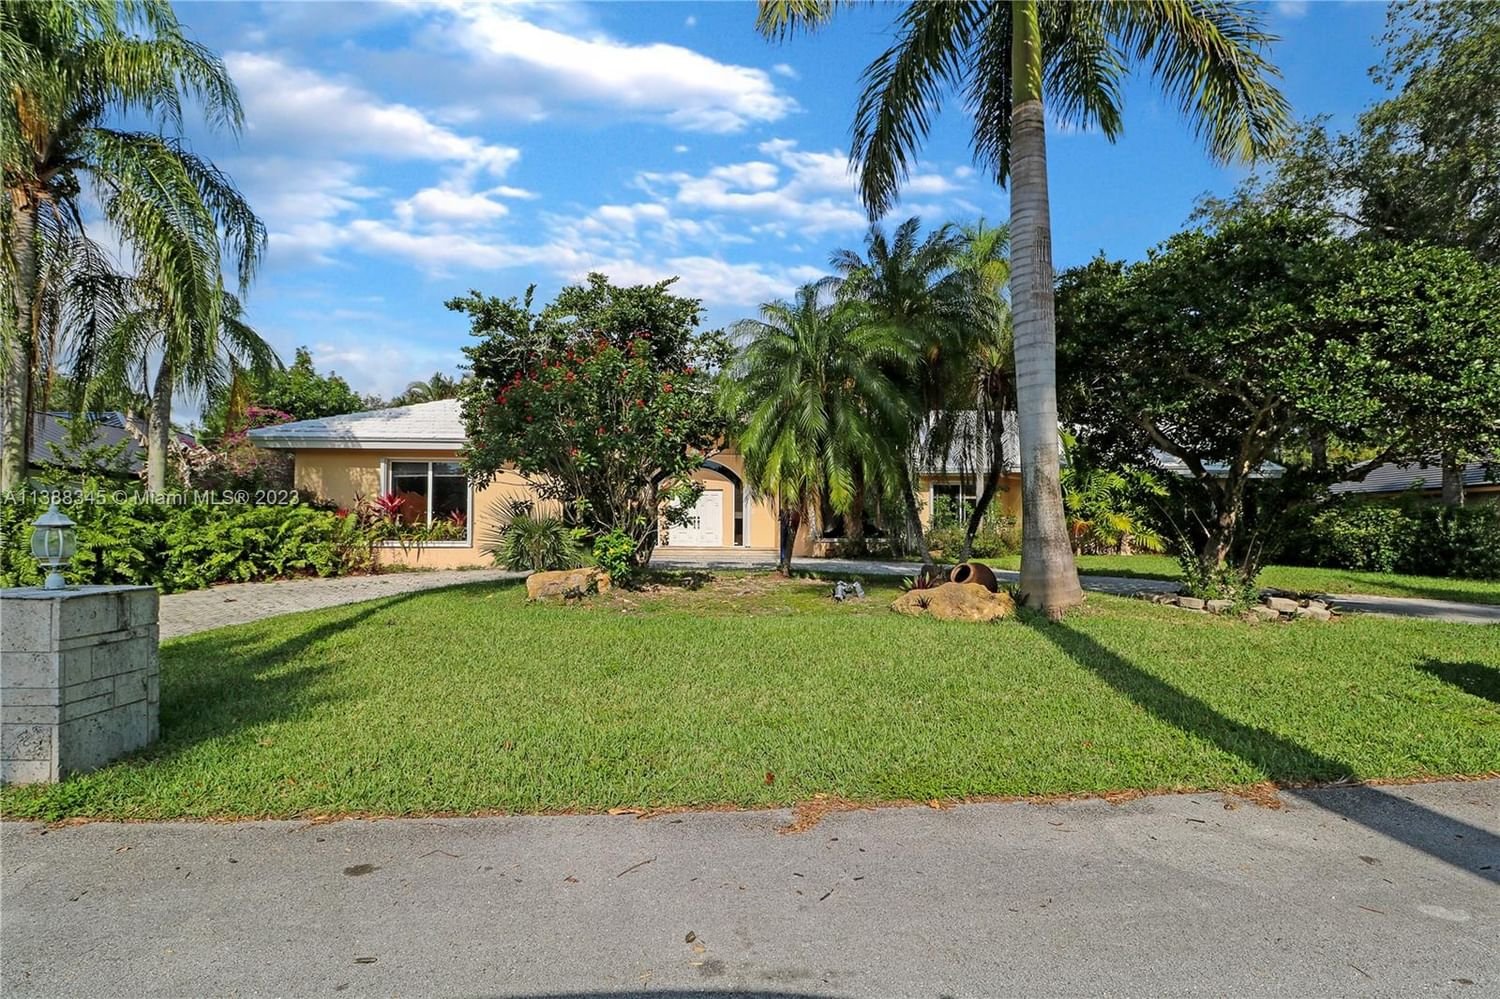 Real estate property located at 13304 106th Ave, Miami-Dade County, Miami, FL